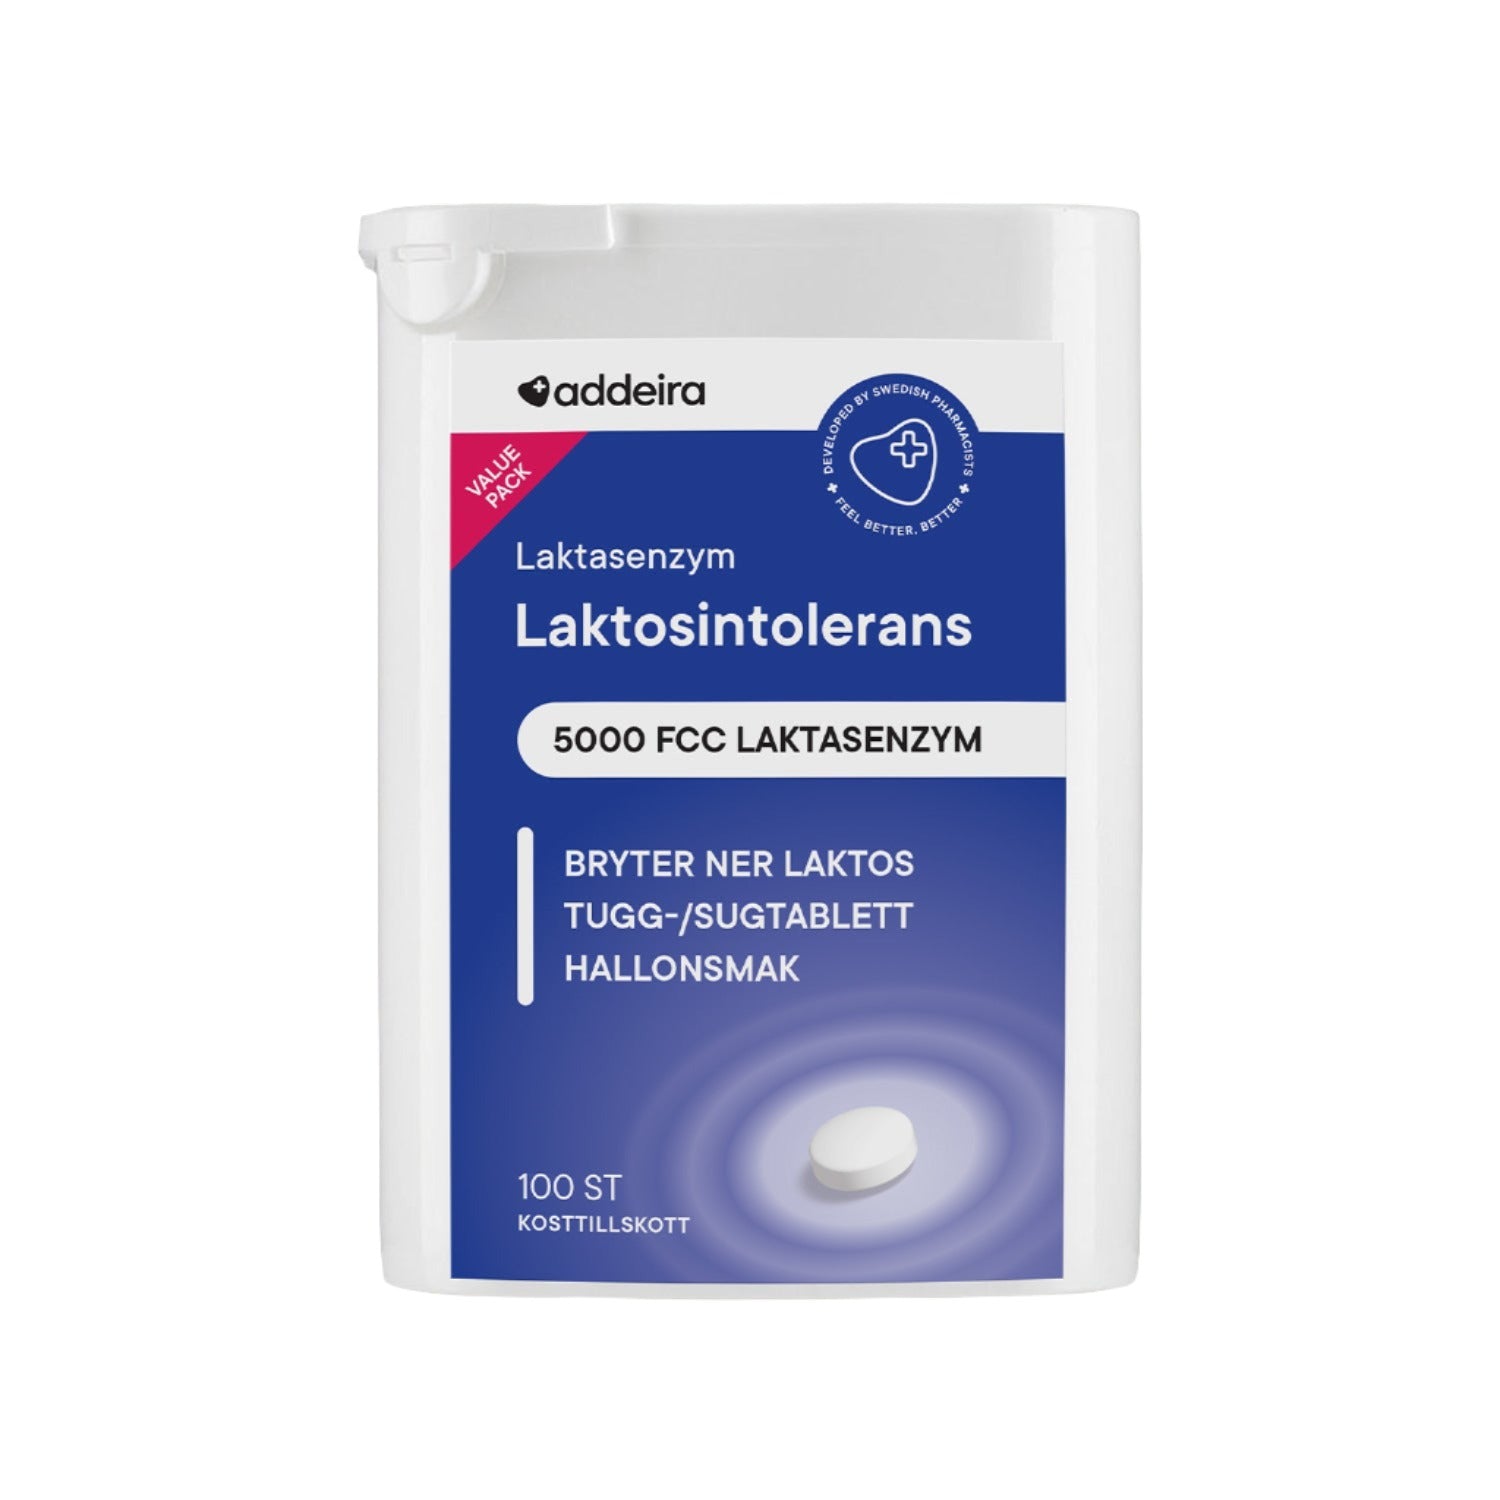 Laktasenzym tuggtablett vid laktosintolerans